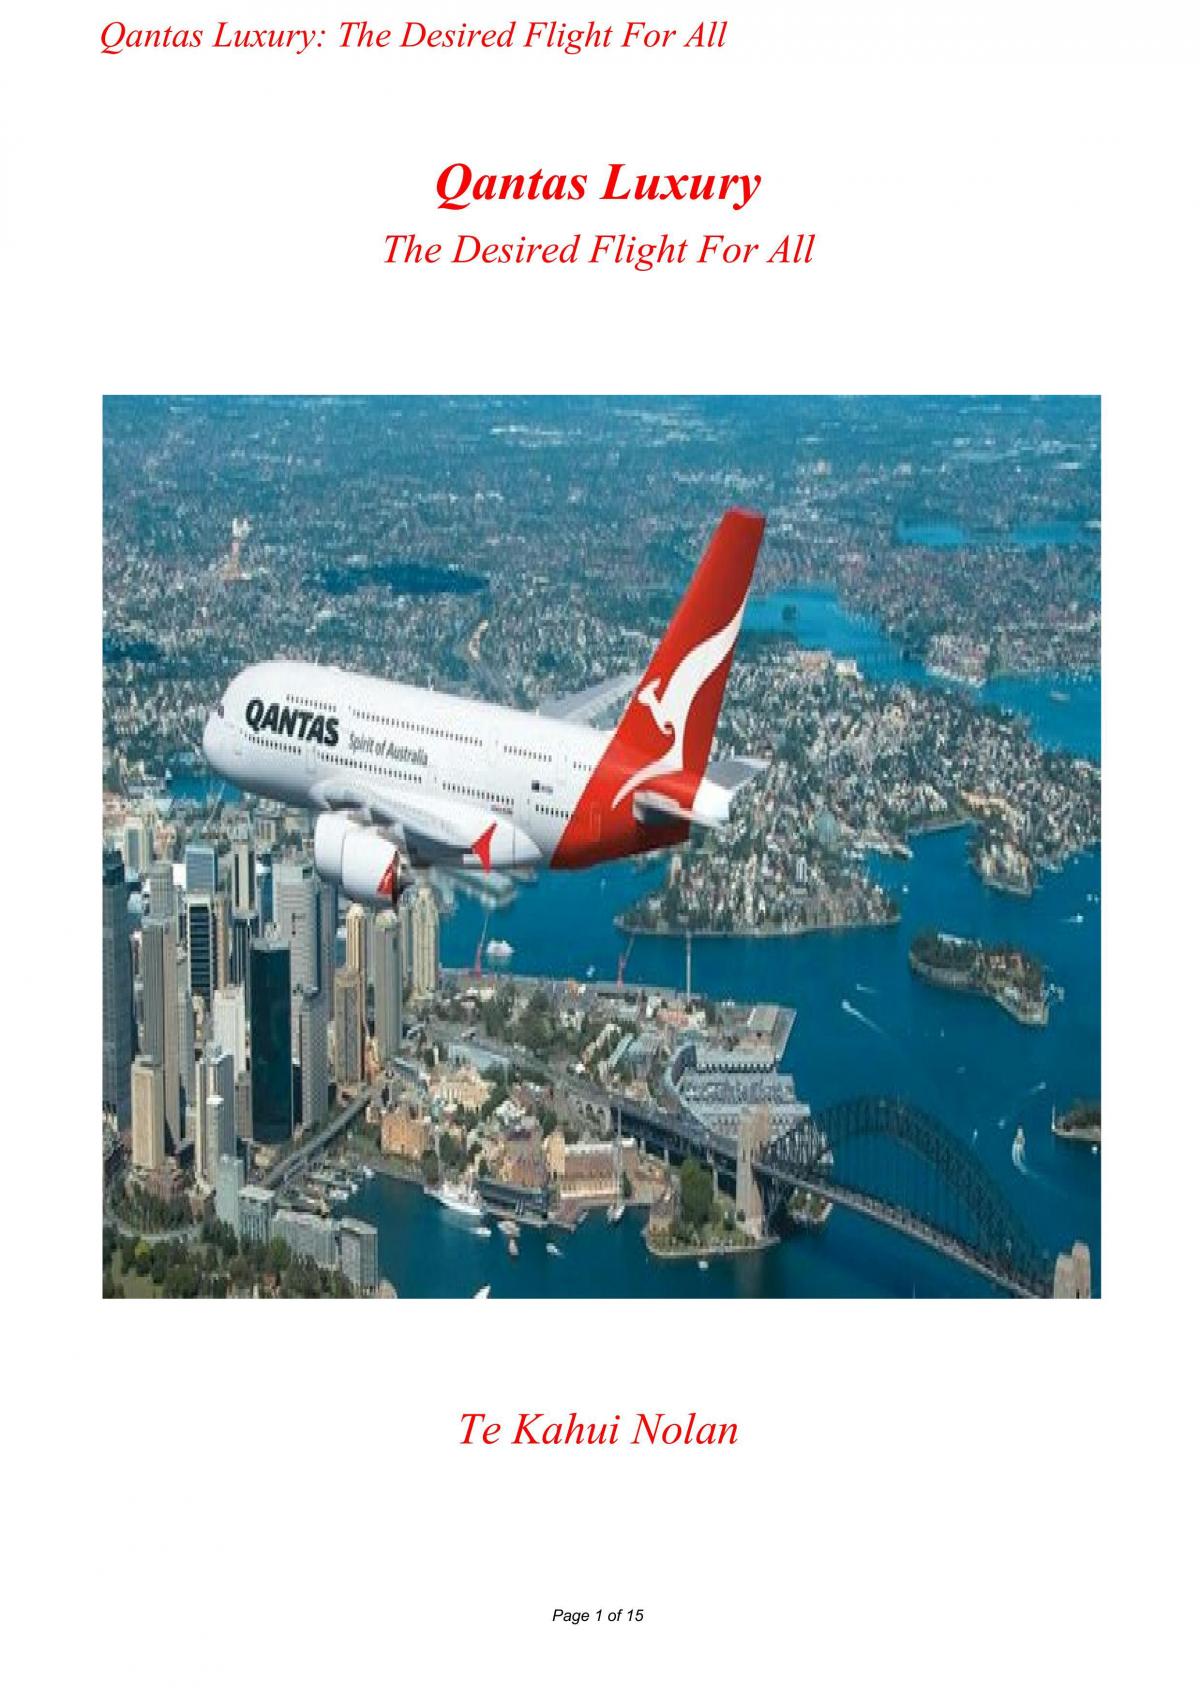 qantas case study pdf